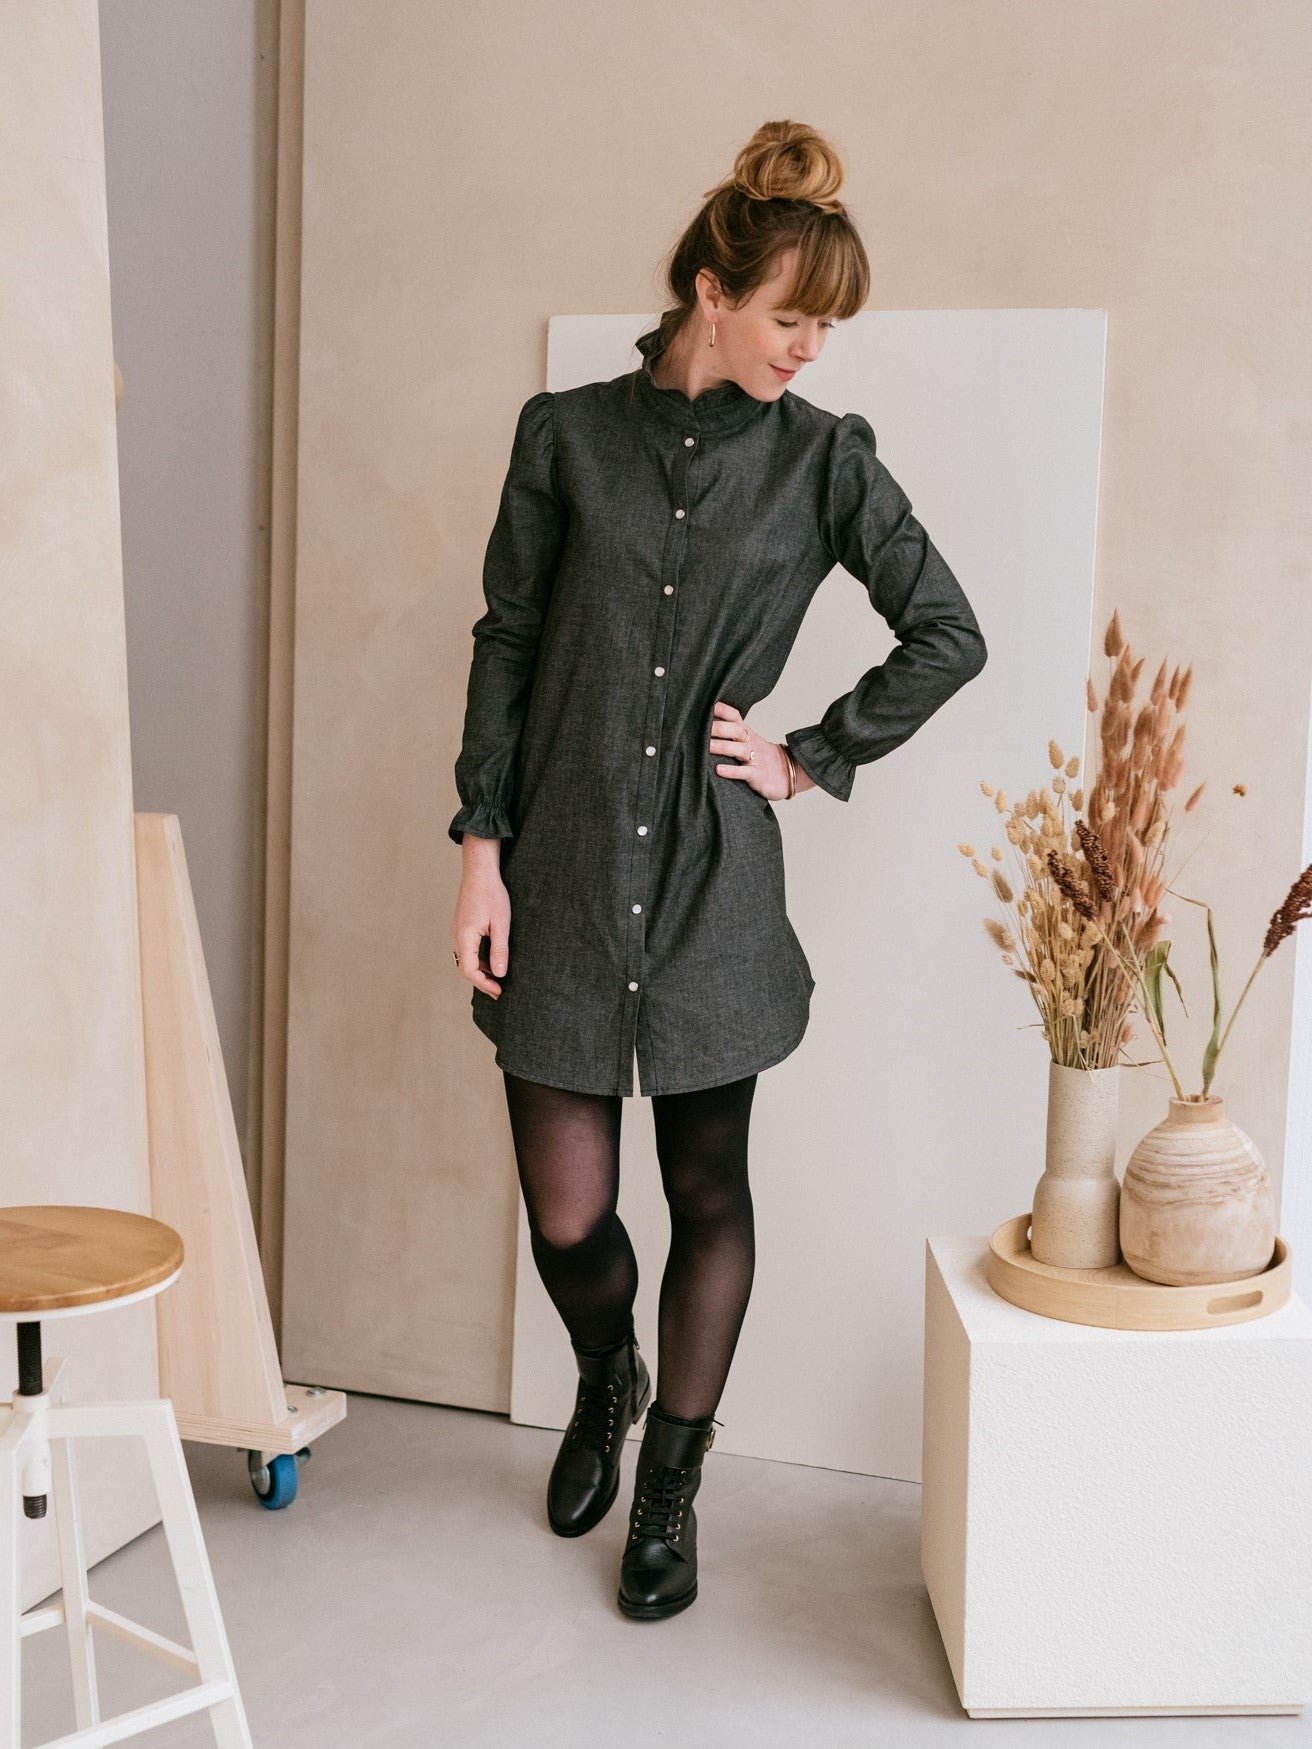 Chemise / robe Hazel - Patron Couture PDF ou Pochette - Joli Lab